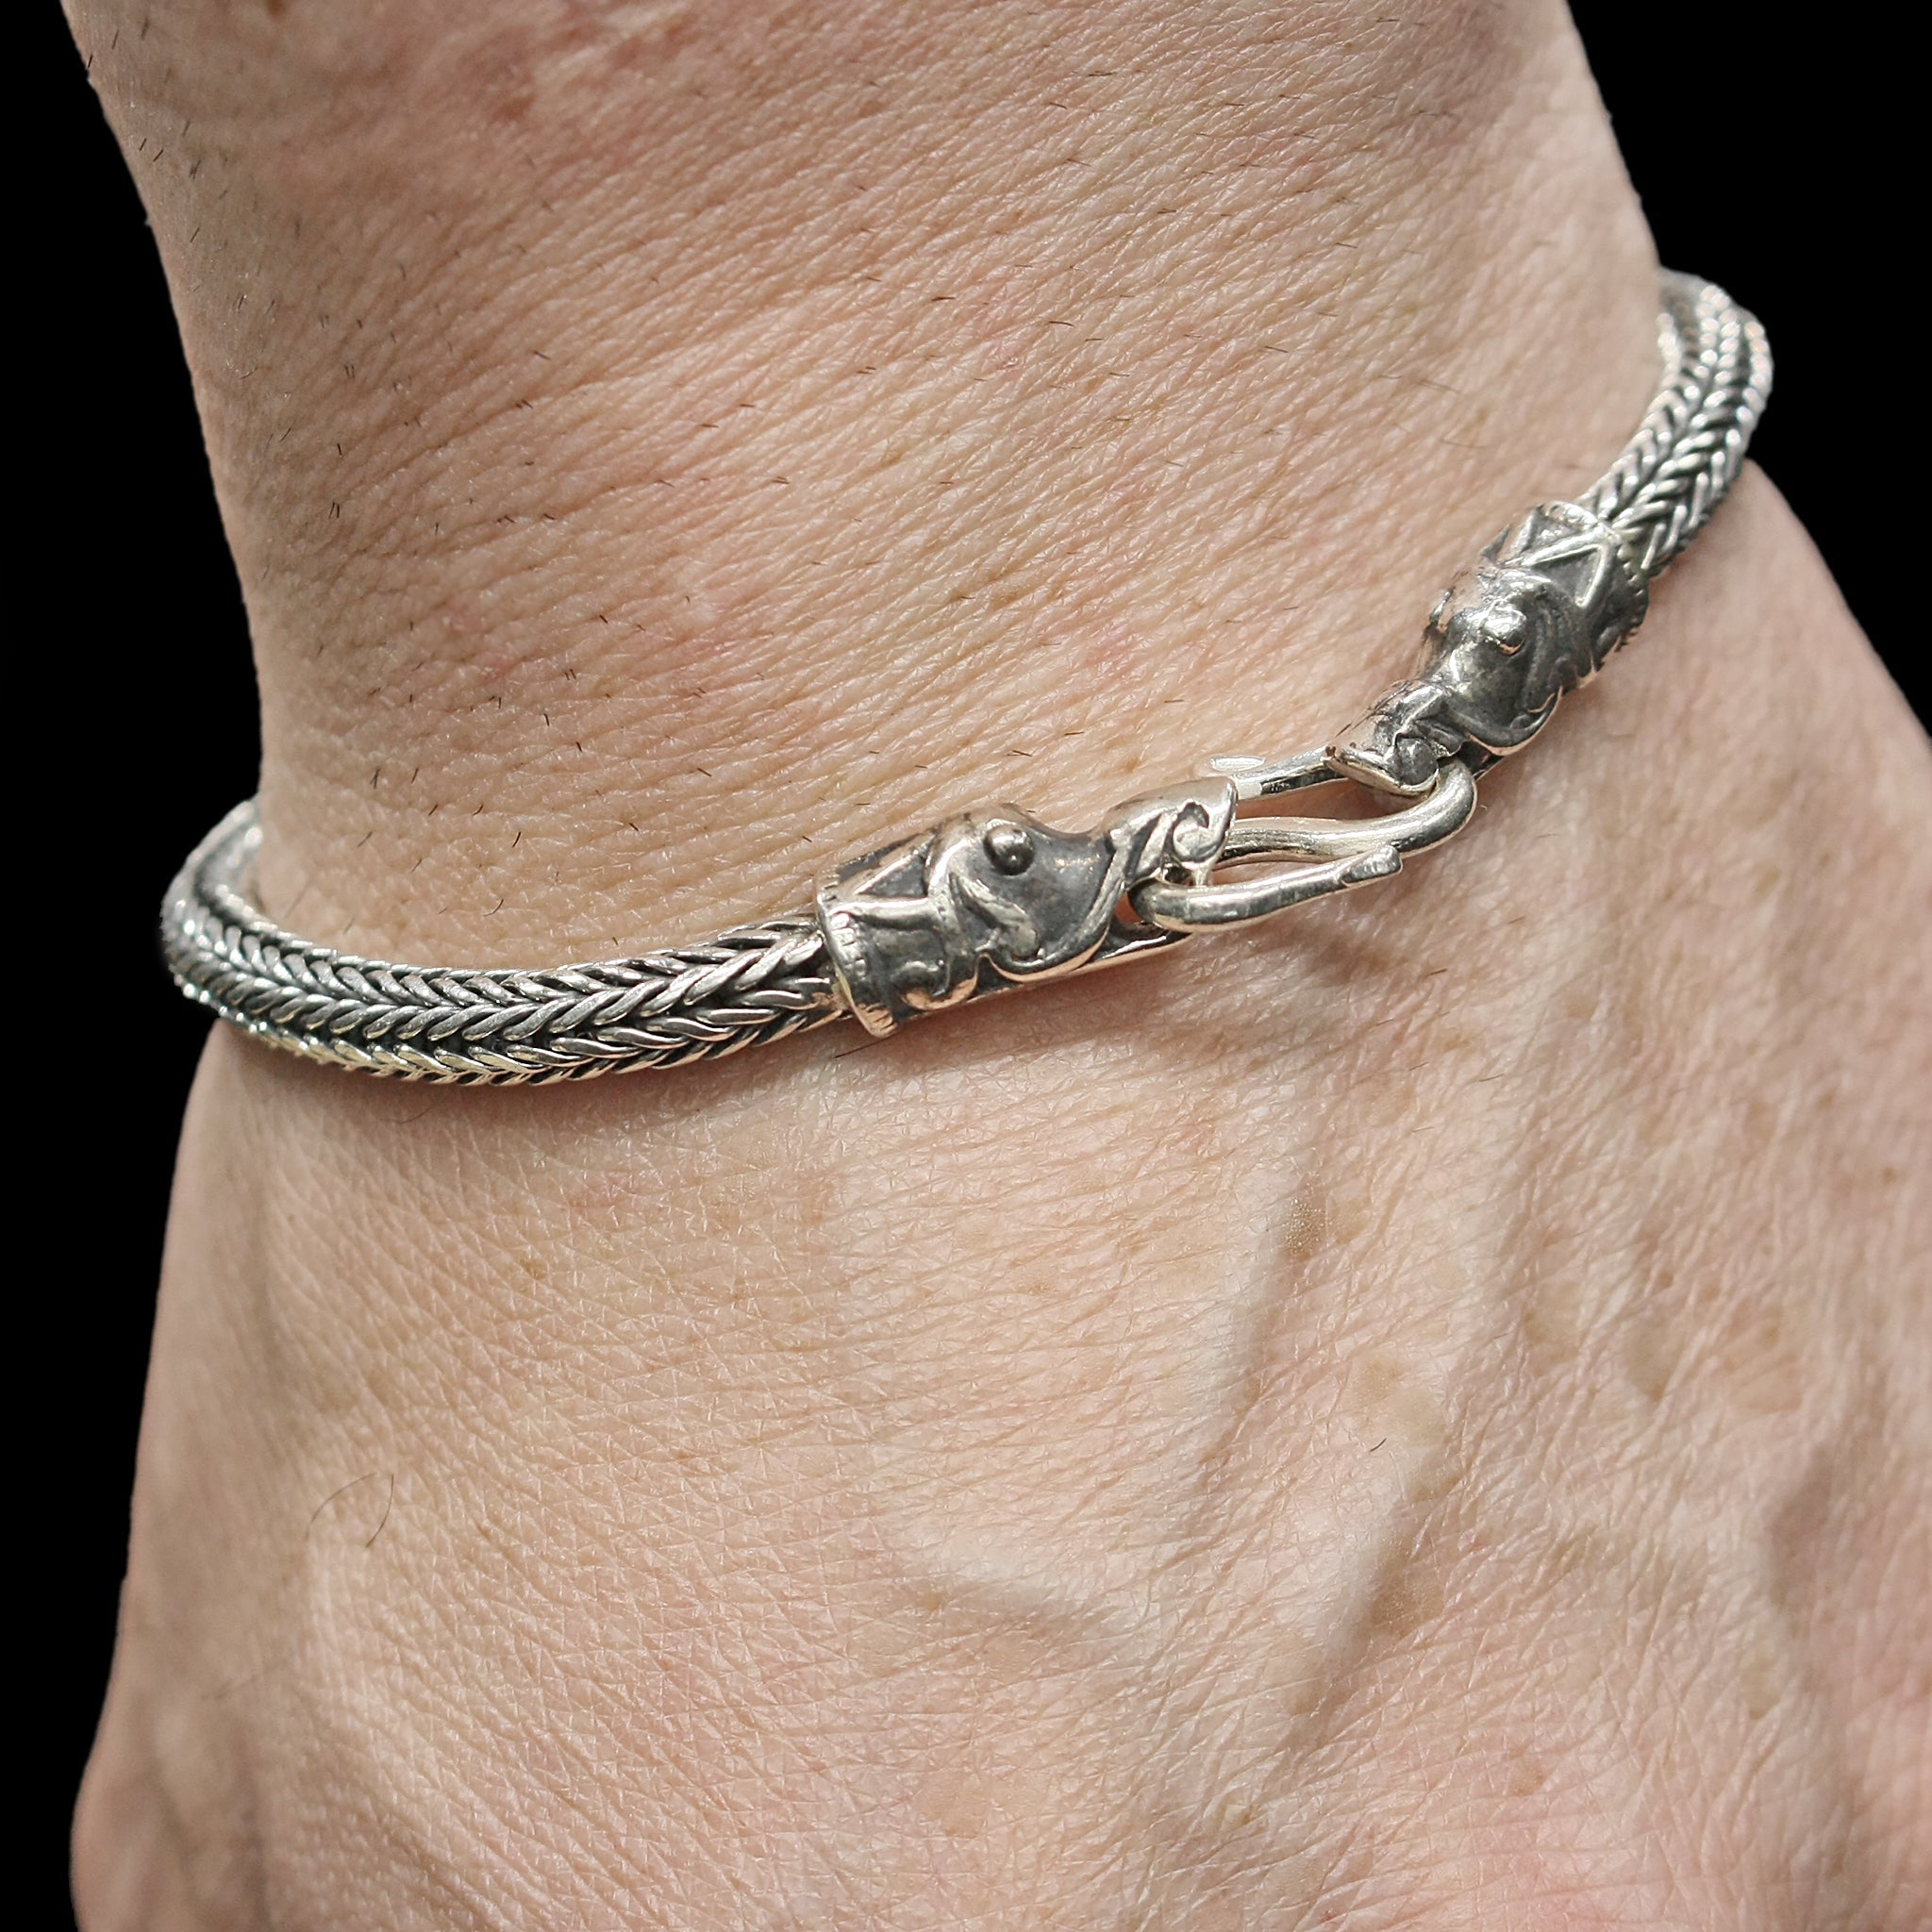 5mm Silver Snake Bracelet With Gotlandic Dragon Heads On Wrist